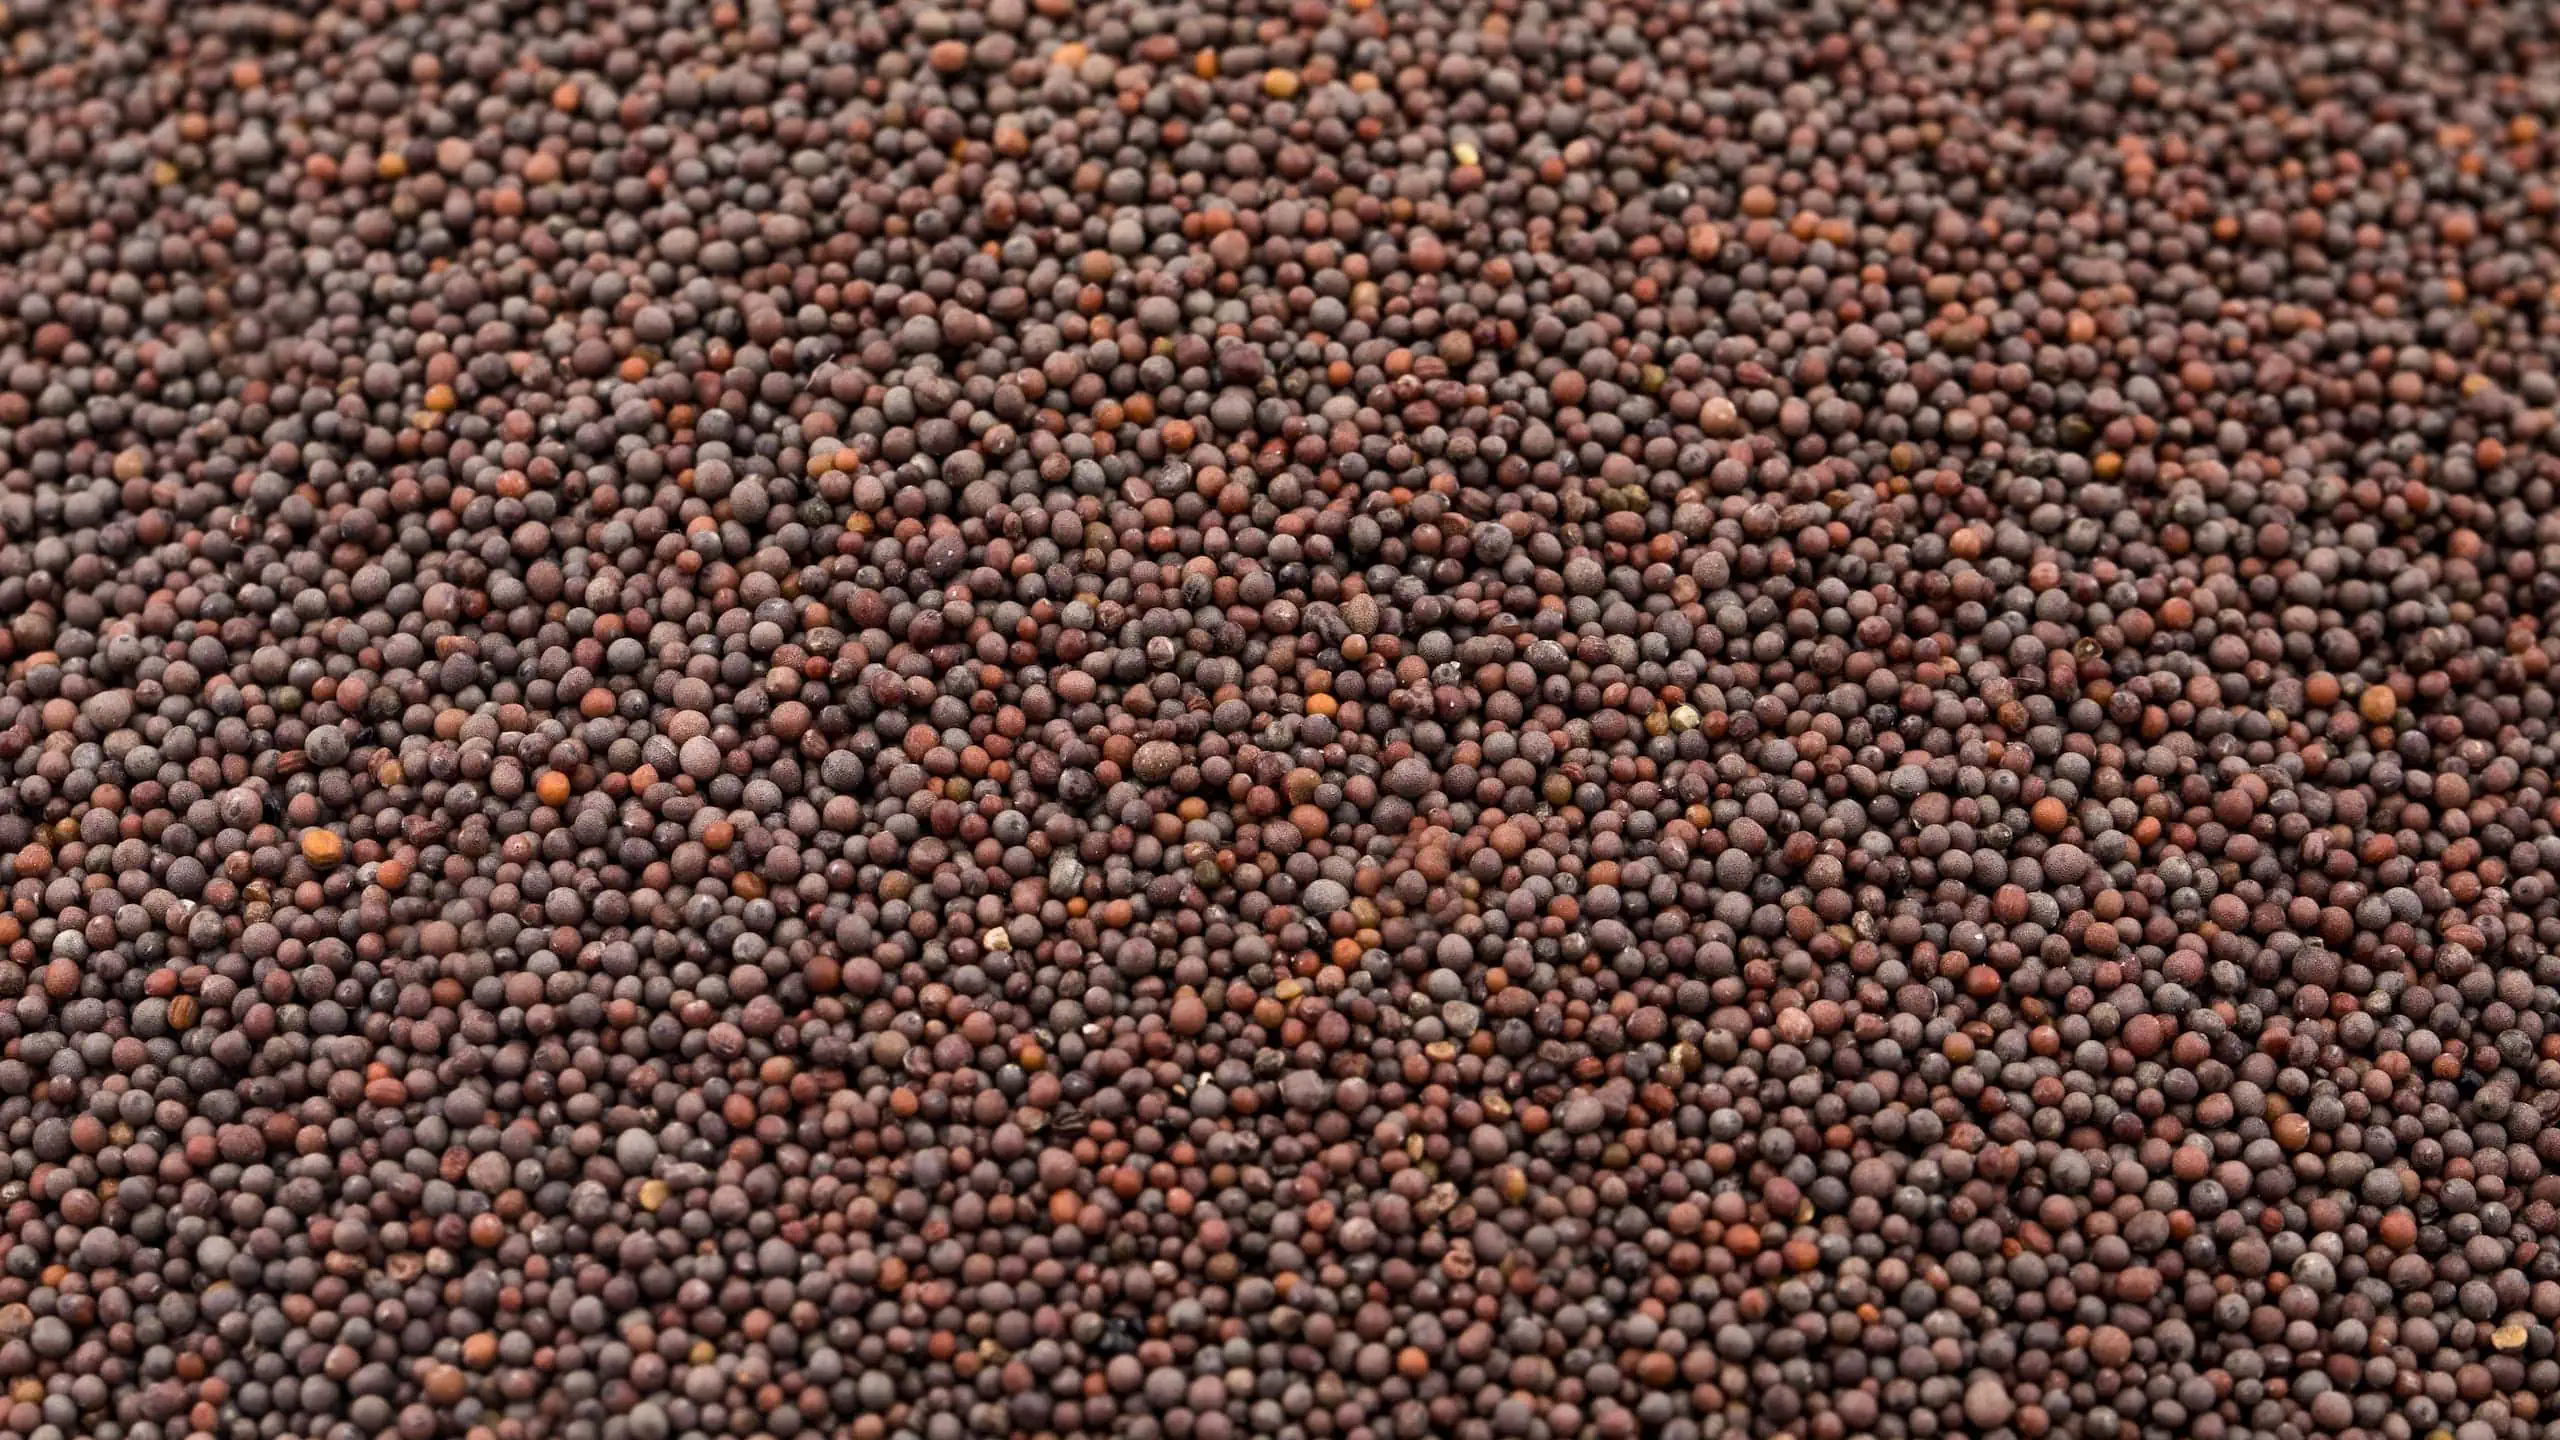 Jakhya seeds